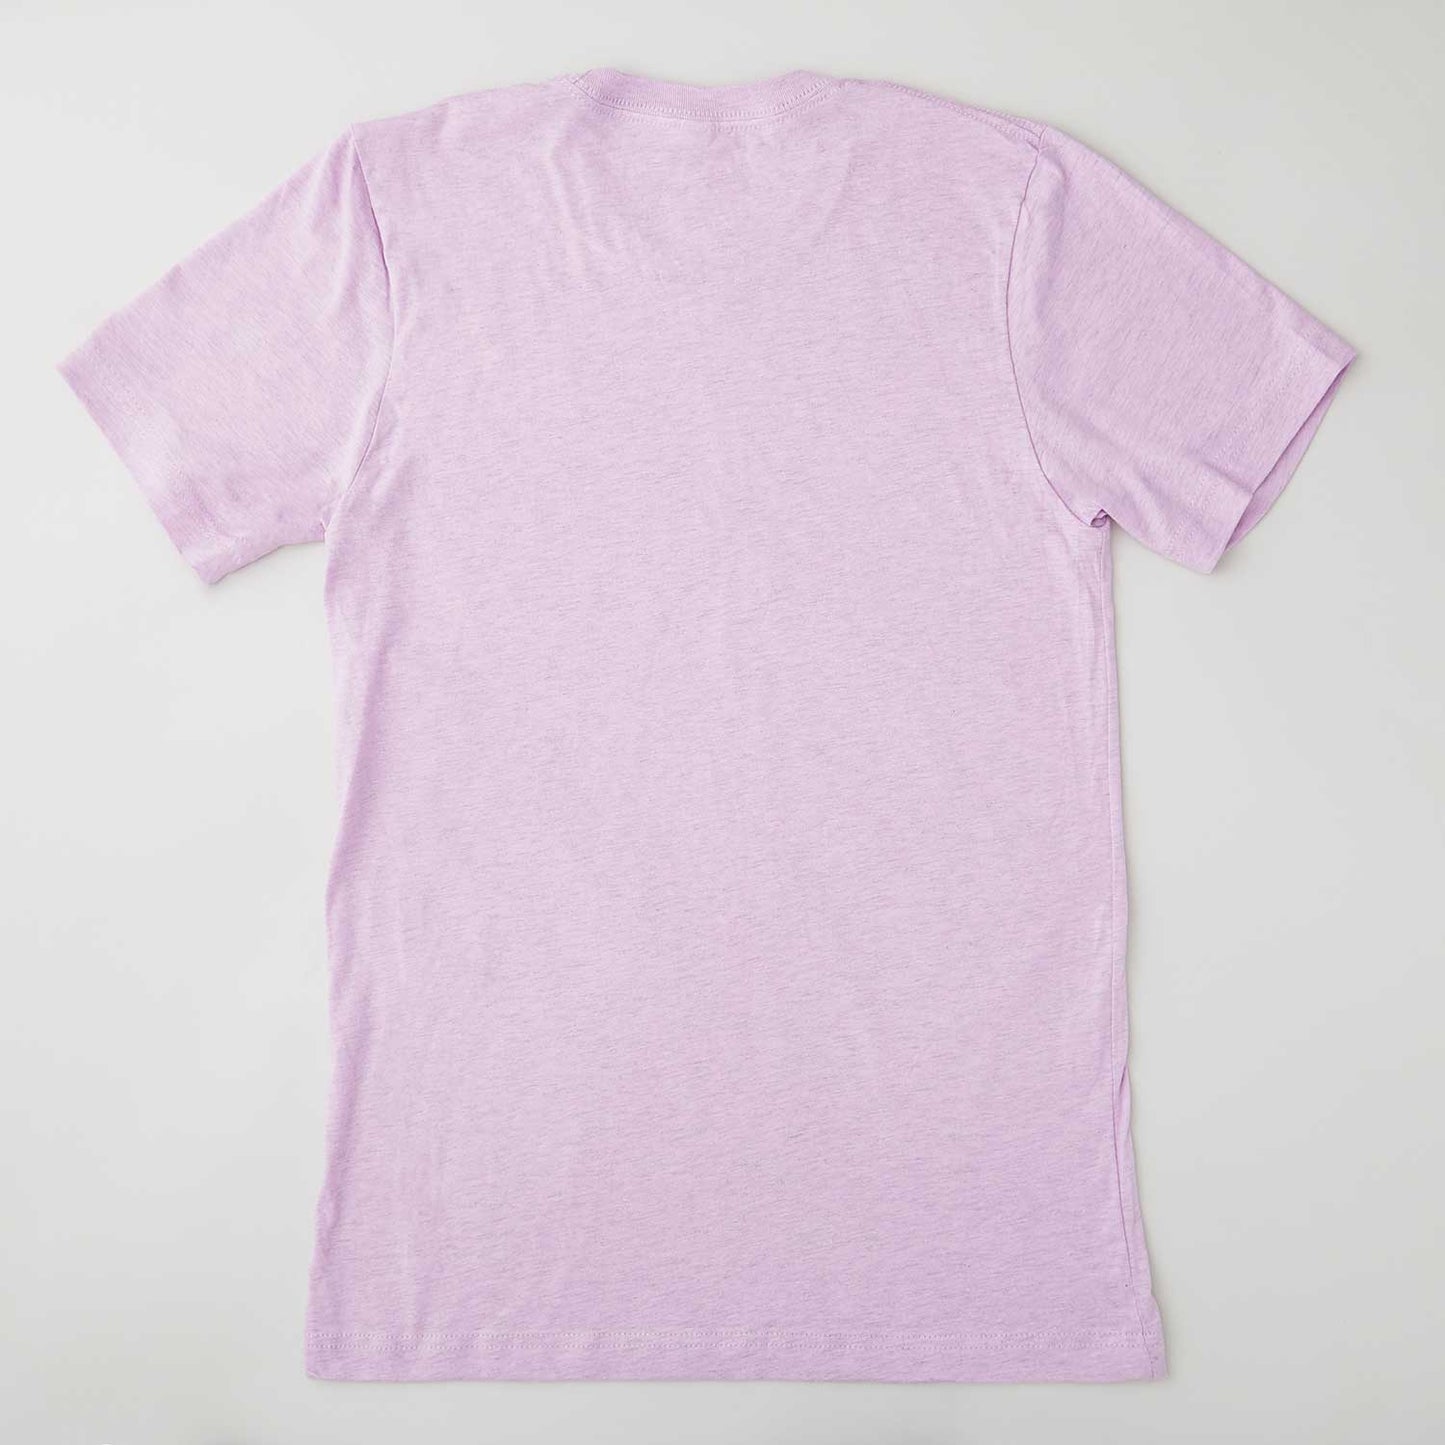 Quiltmaker T-shirt - Heather Prism Lilac - XL Alternative View #1